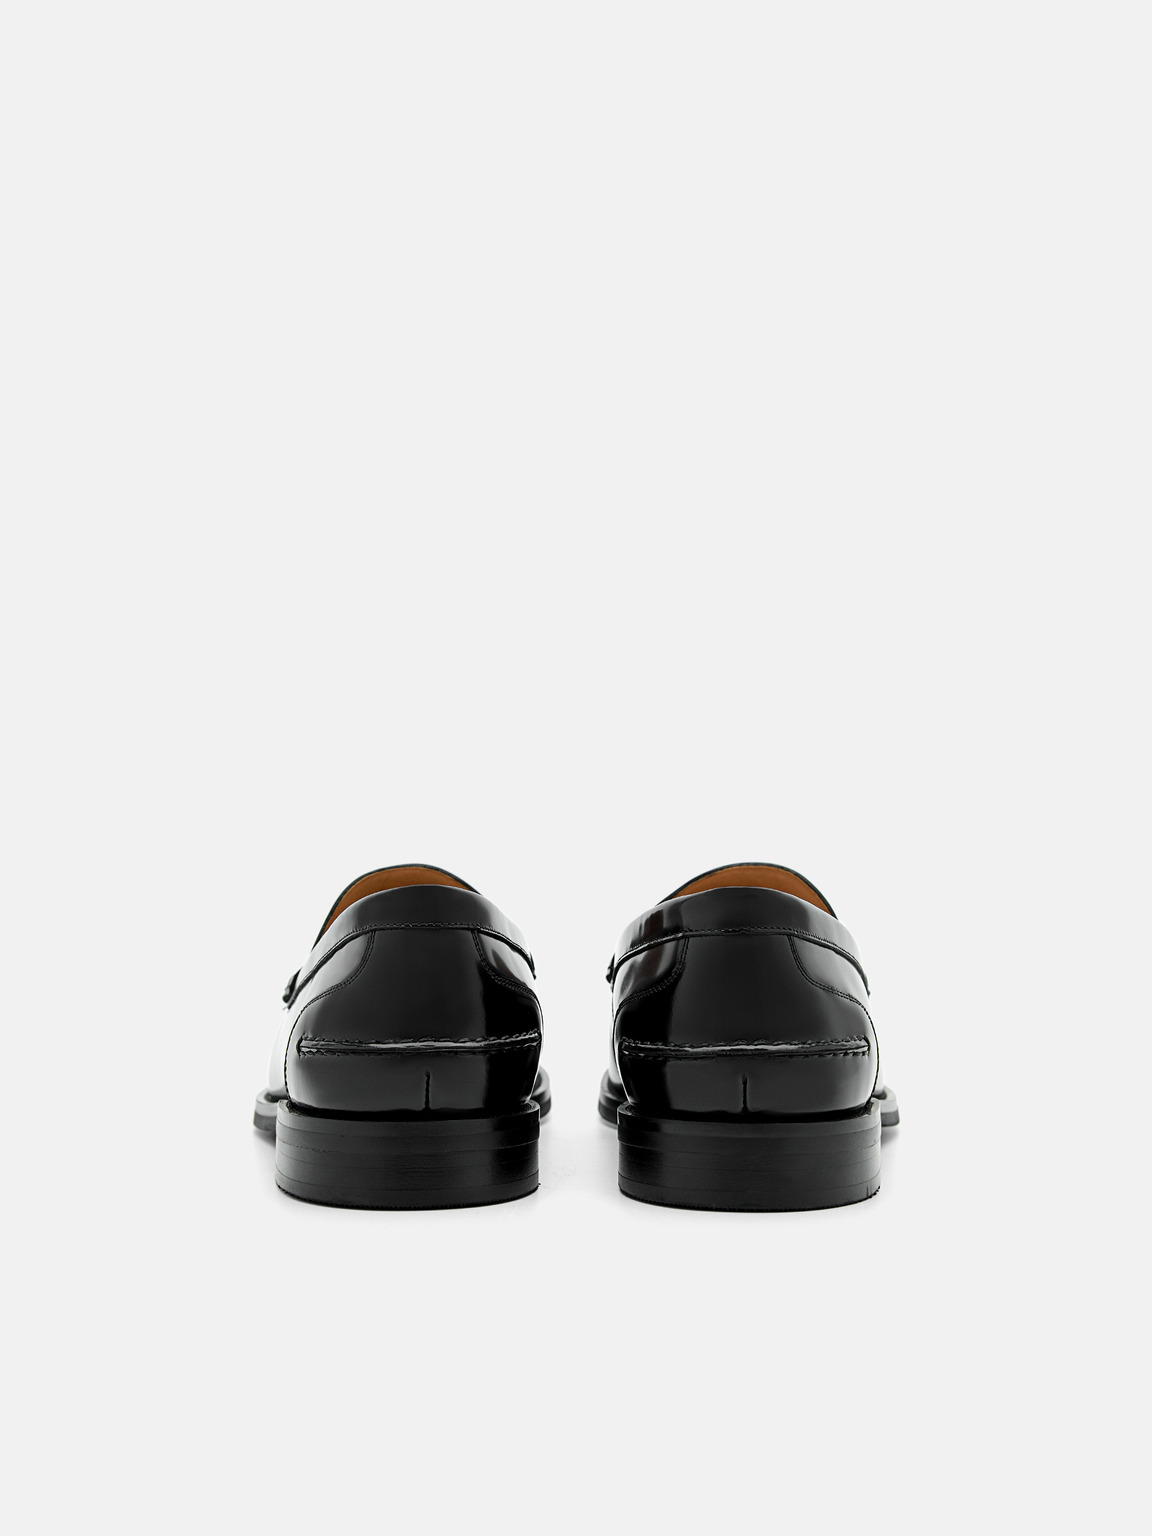 Robert Leather Horsebit Loafers, Black